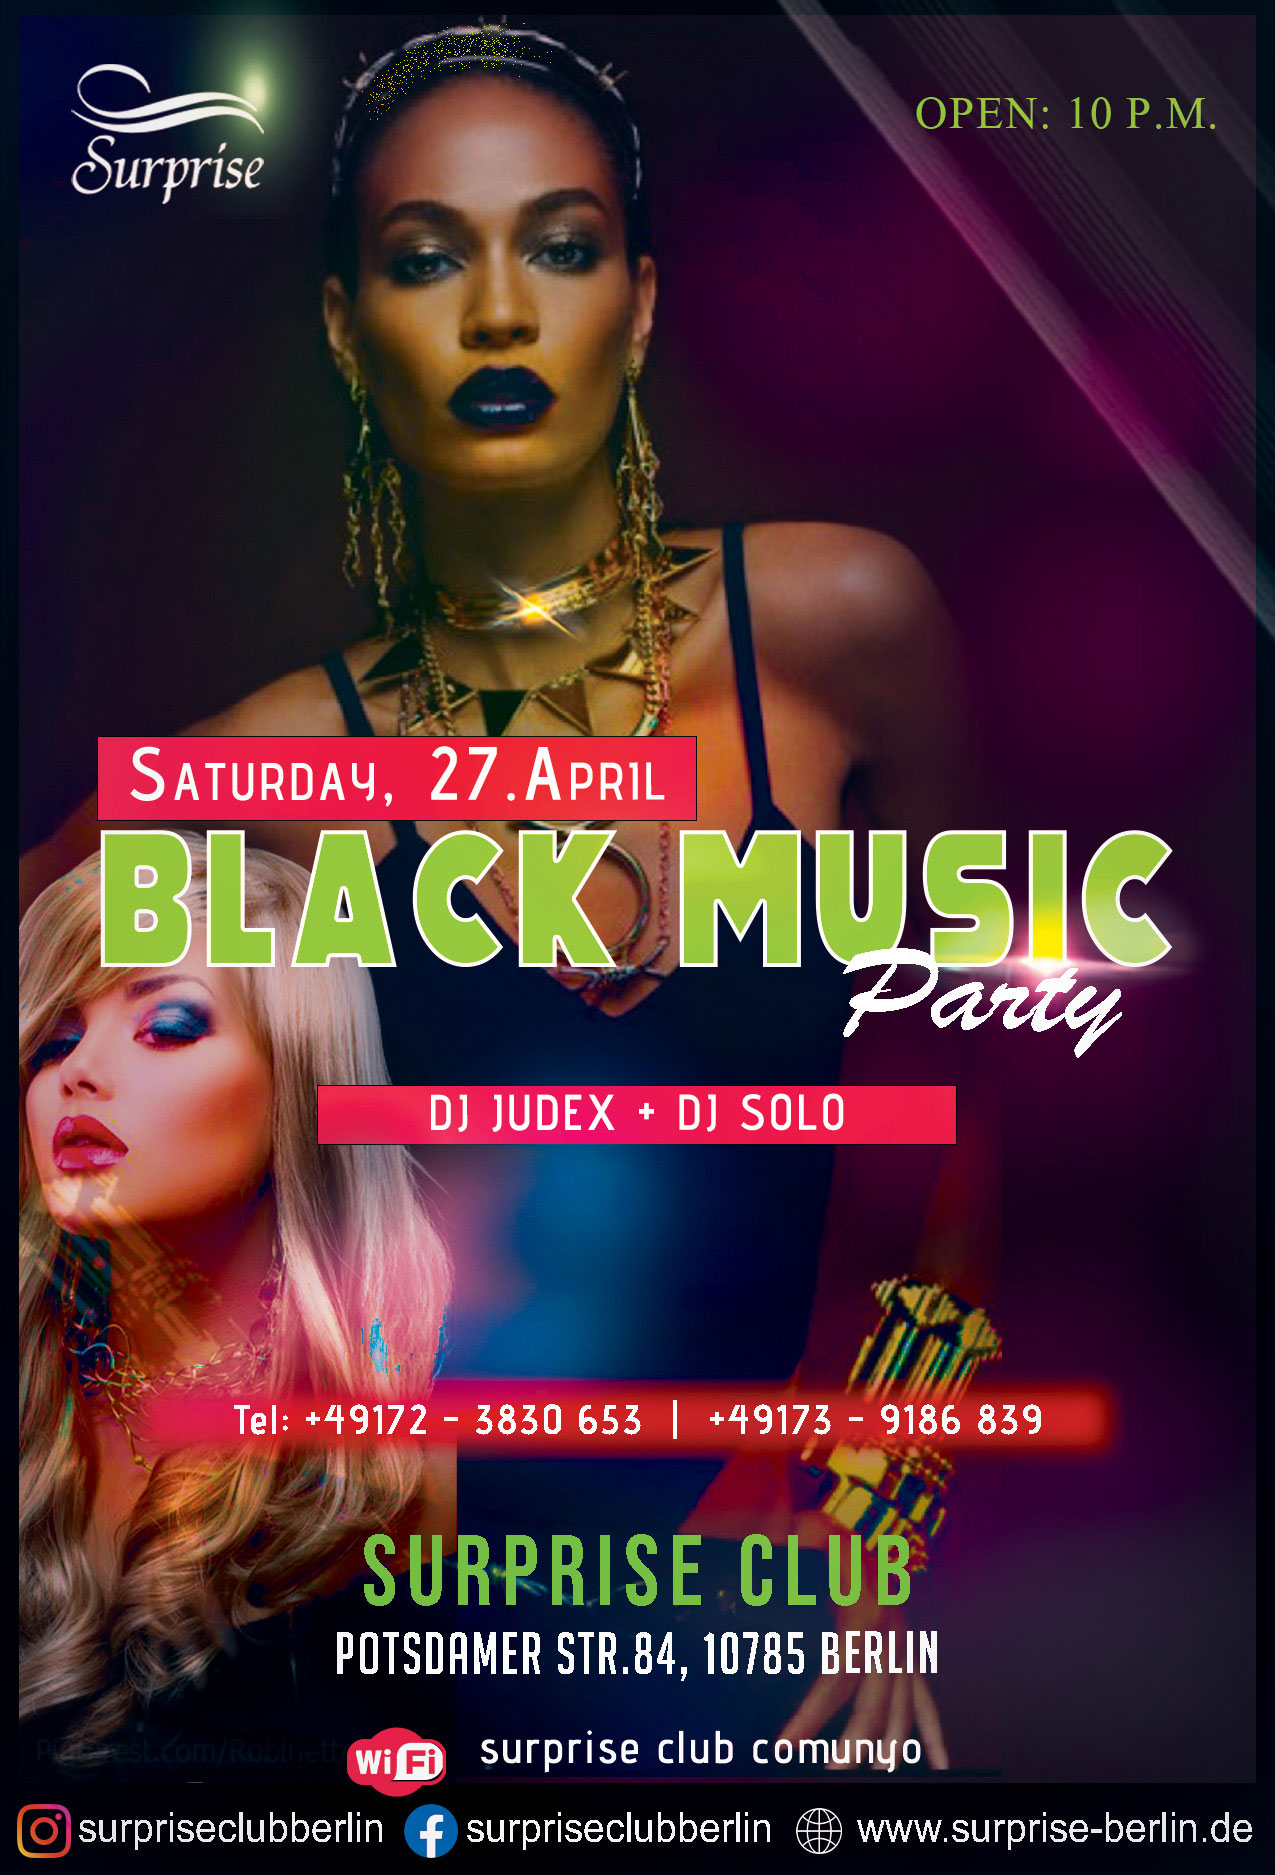 saturday party in Berlin, Black music party in Surprise night club Berlin, night life Berlin